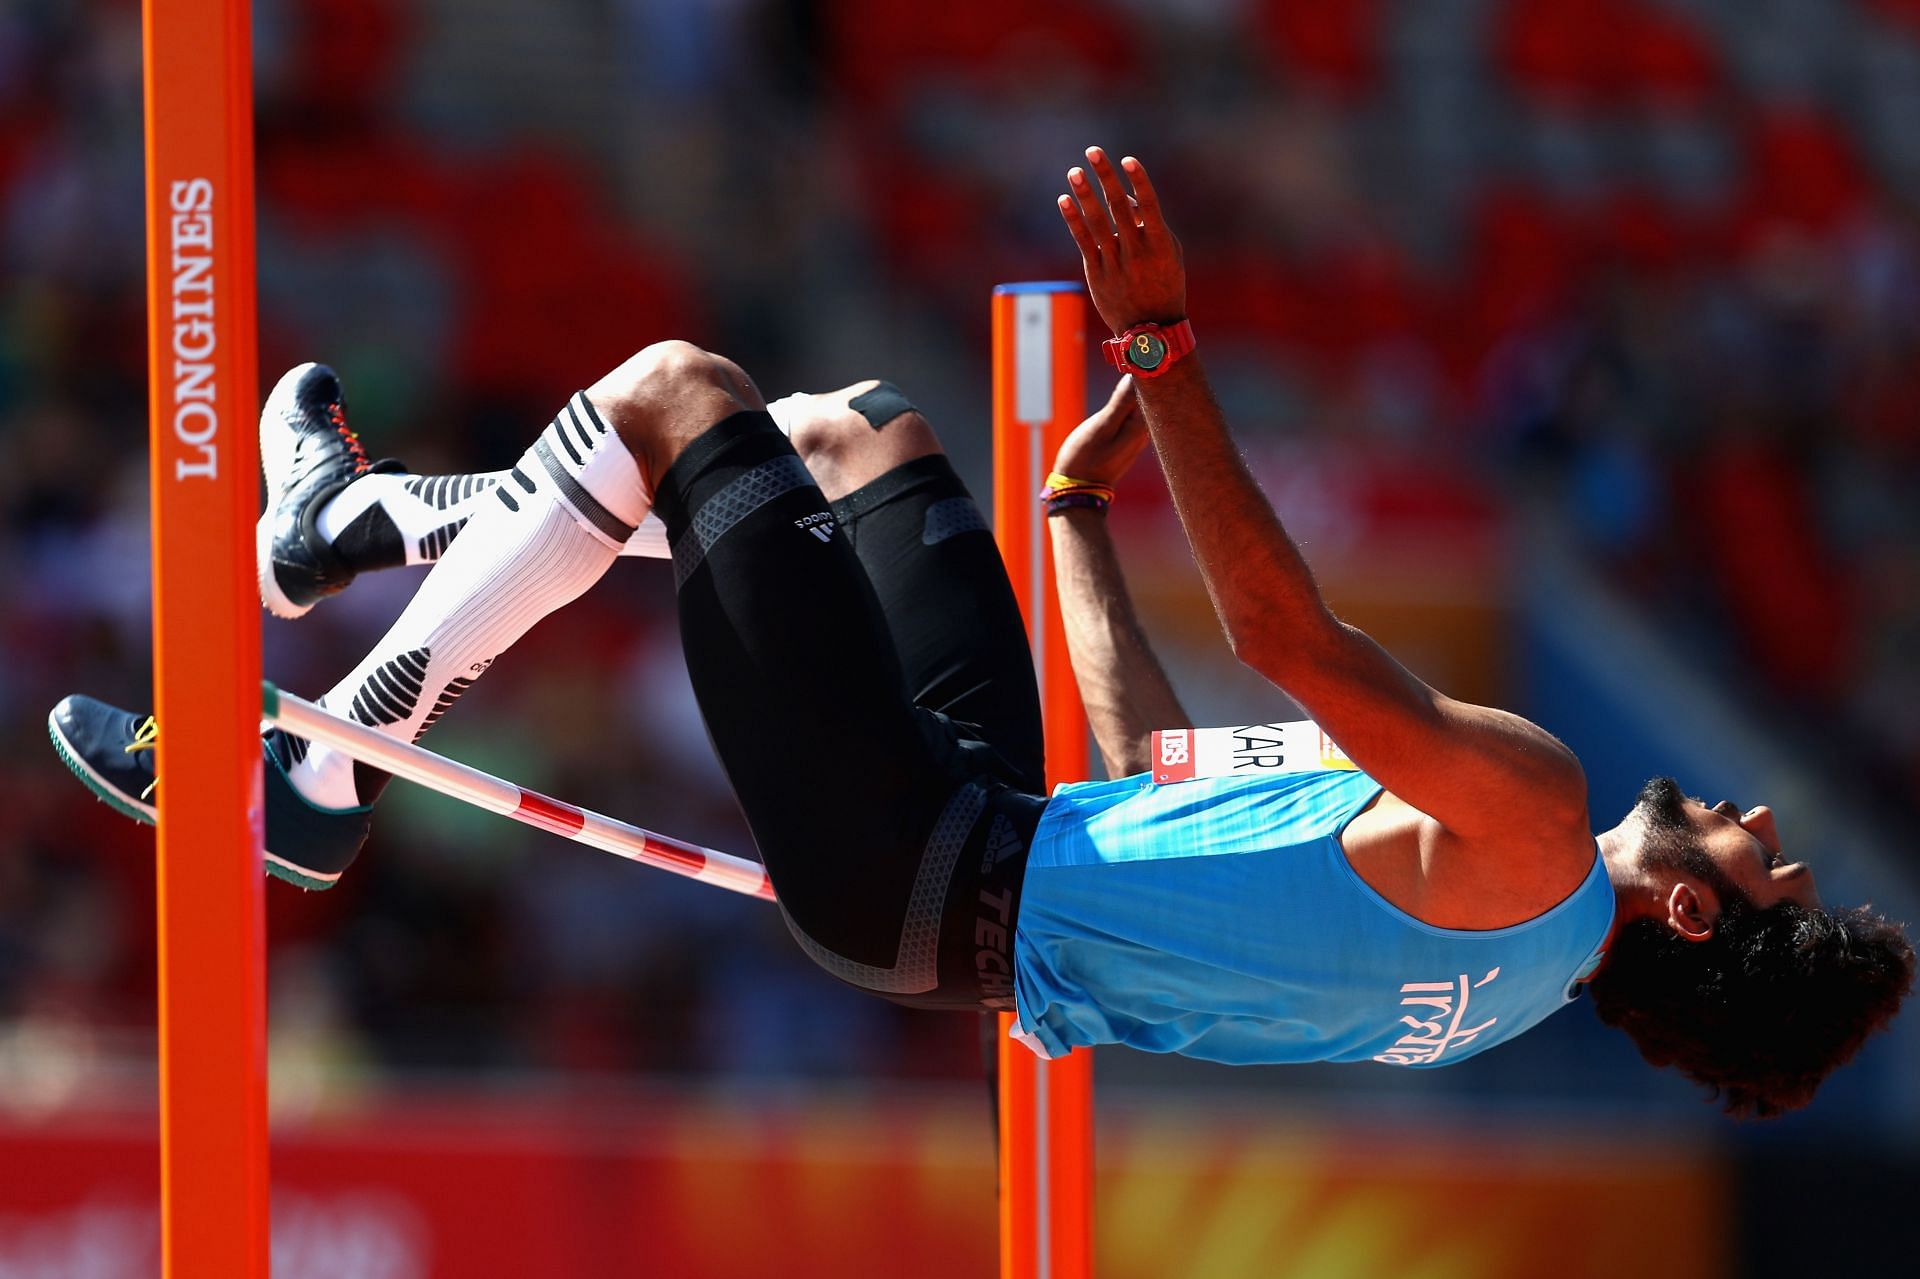 Indian high jumper Tejaswin Shankar. (PC: Getty Images)